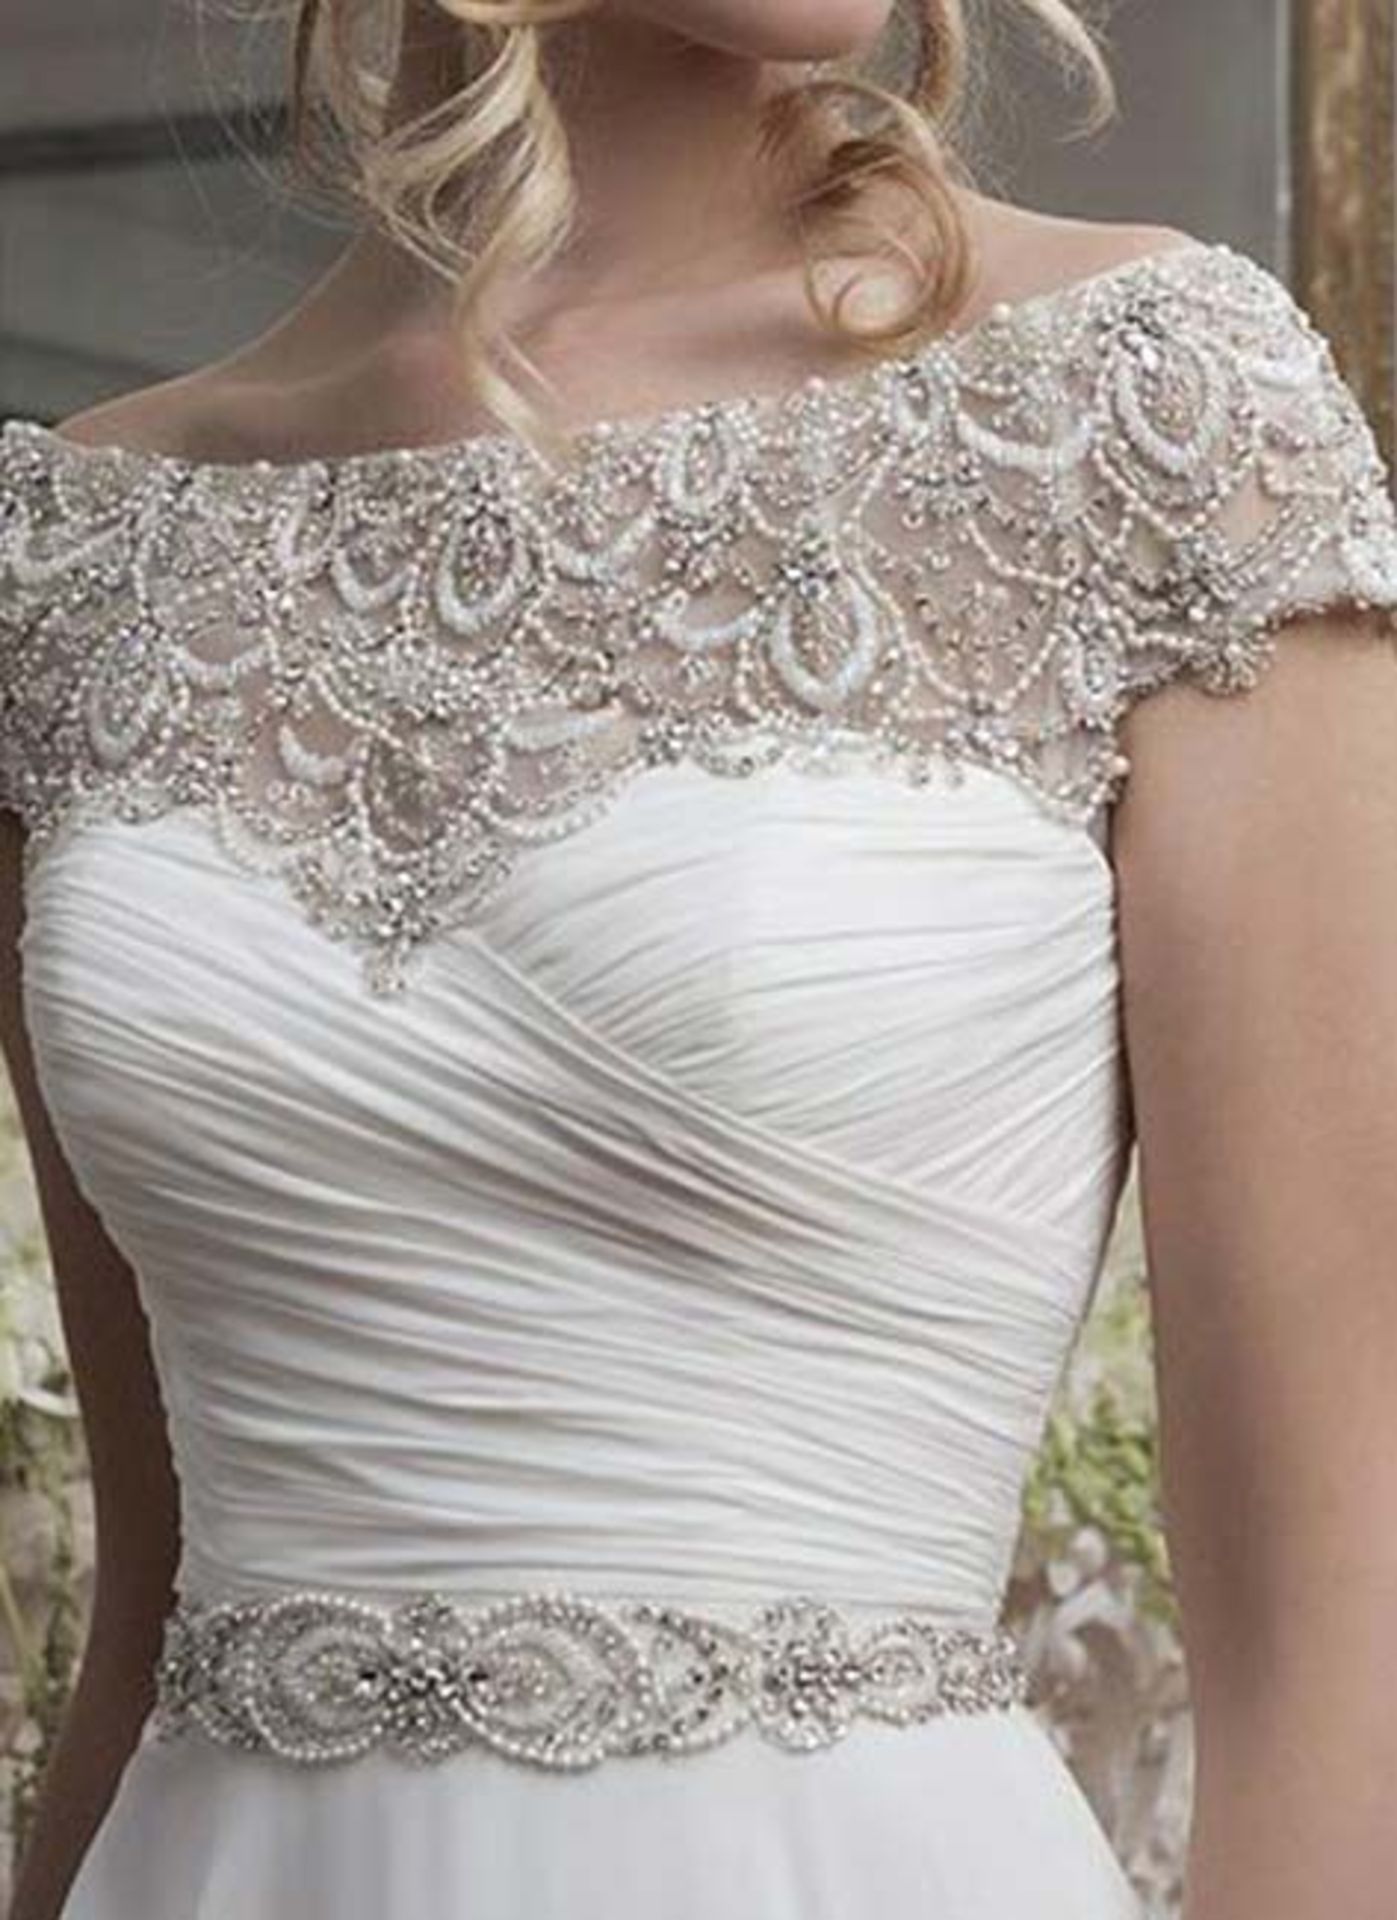 1 x Justin Alexander 'Aphrodite' Chiffon Bridal Gown - UK Size 16 - RRP £1,415 - Image 18 of 23